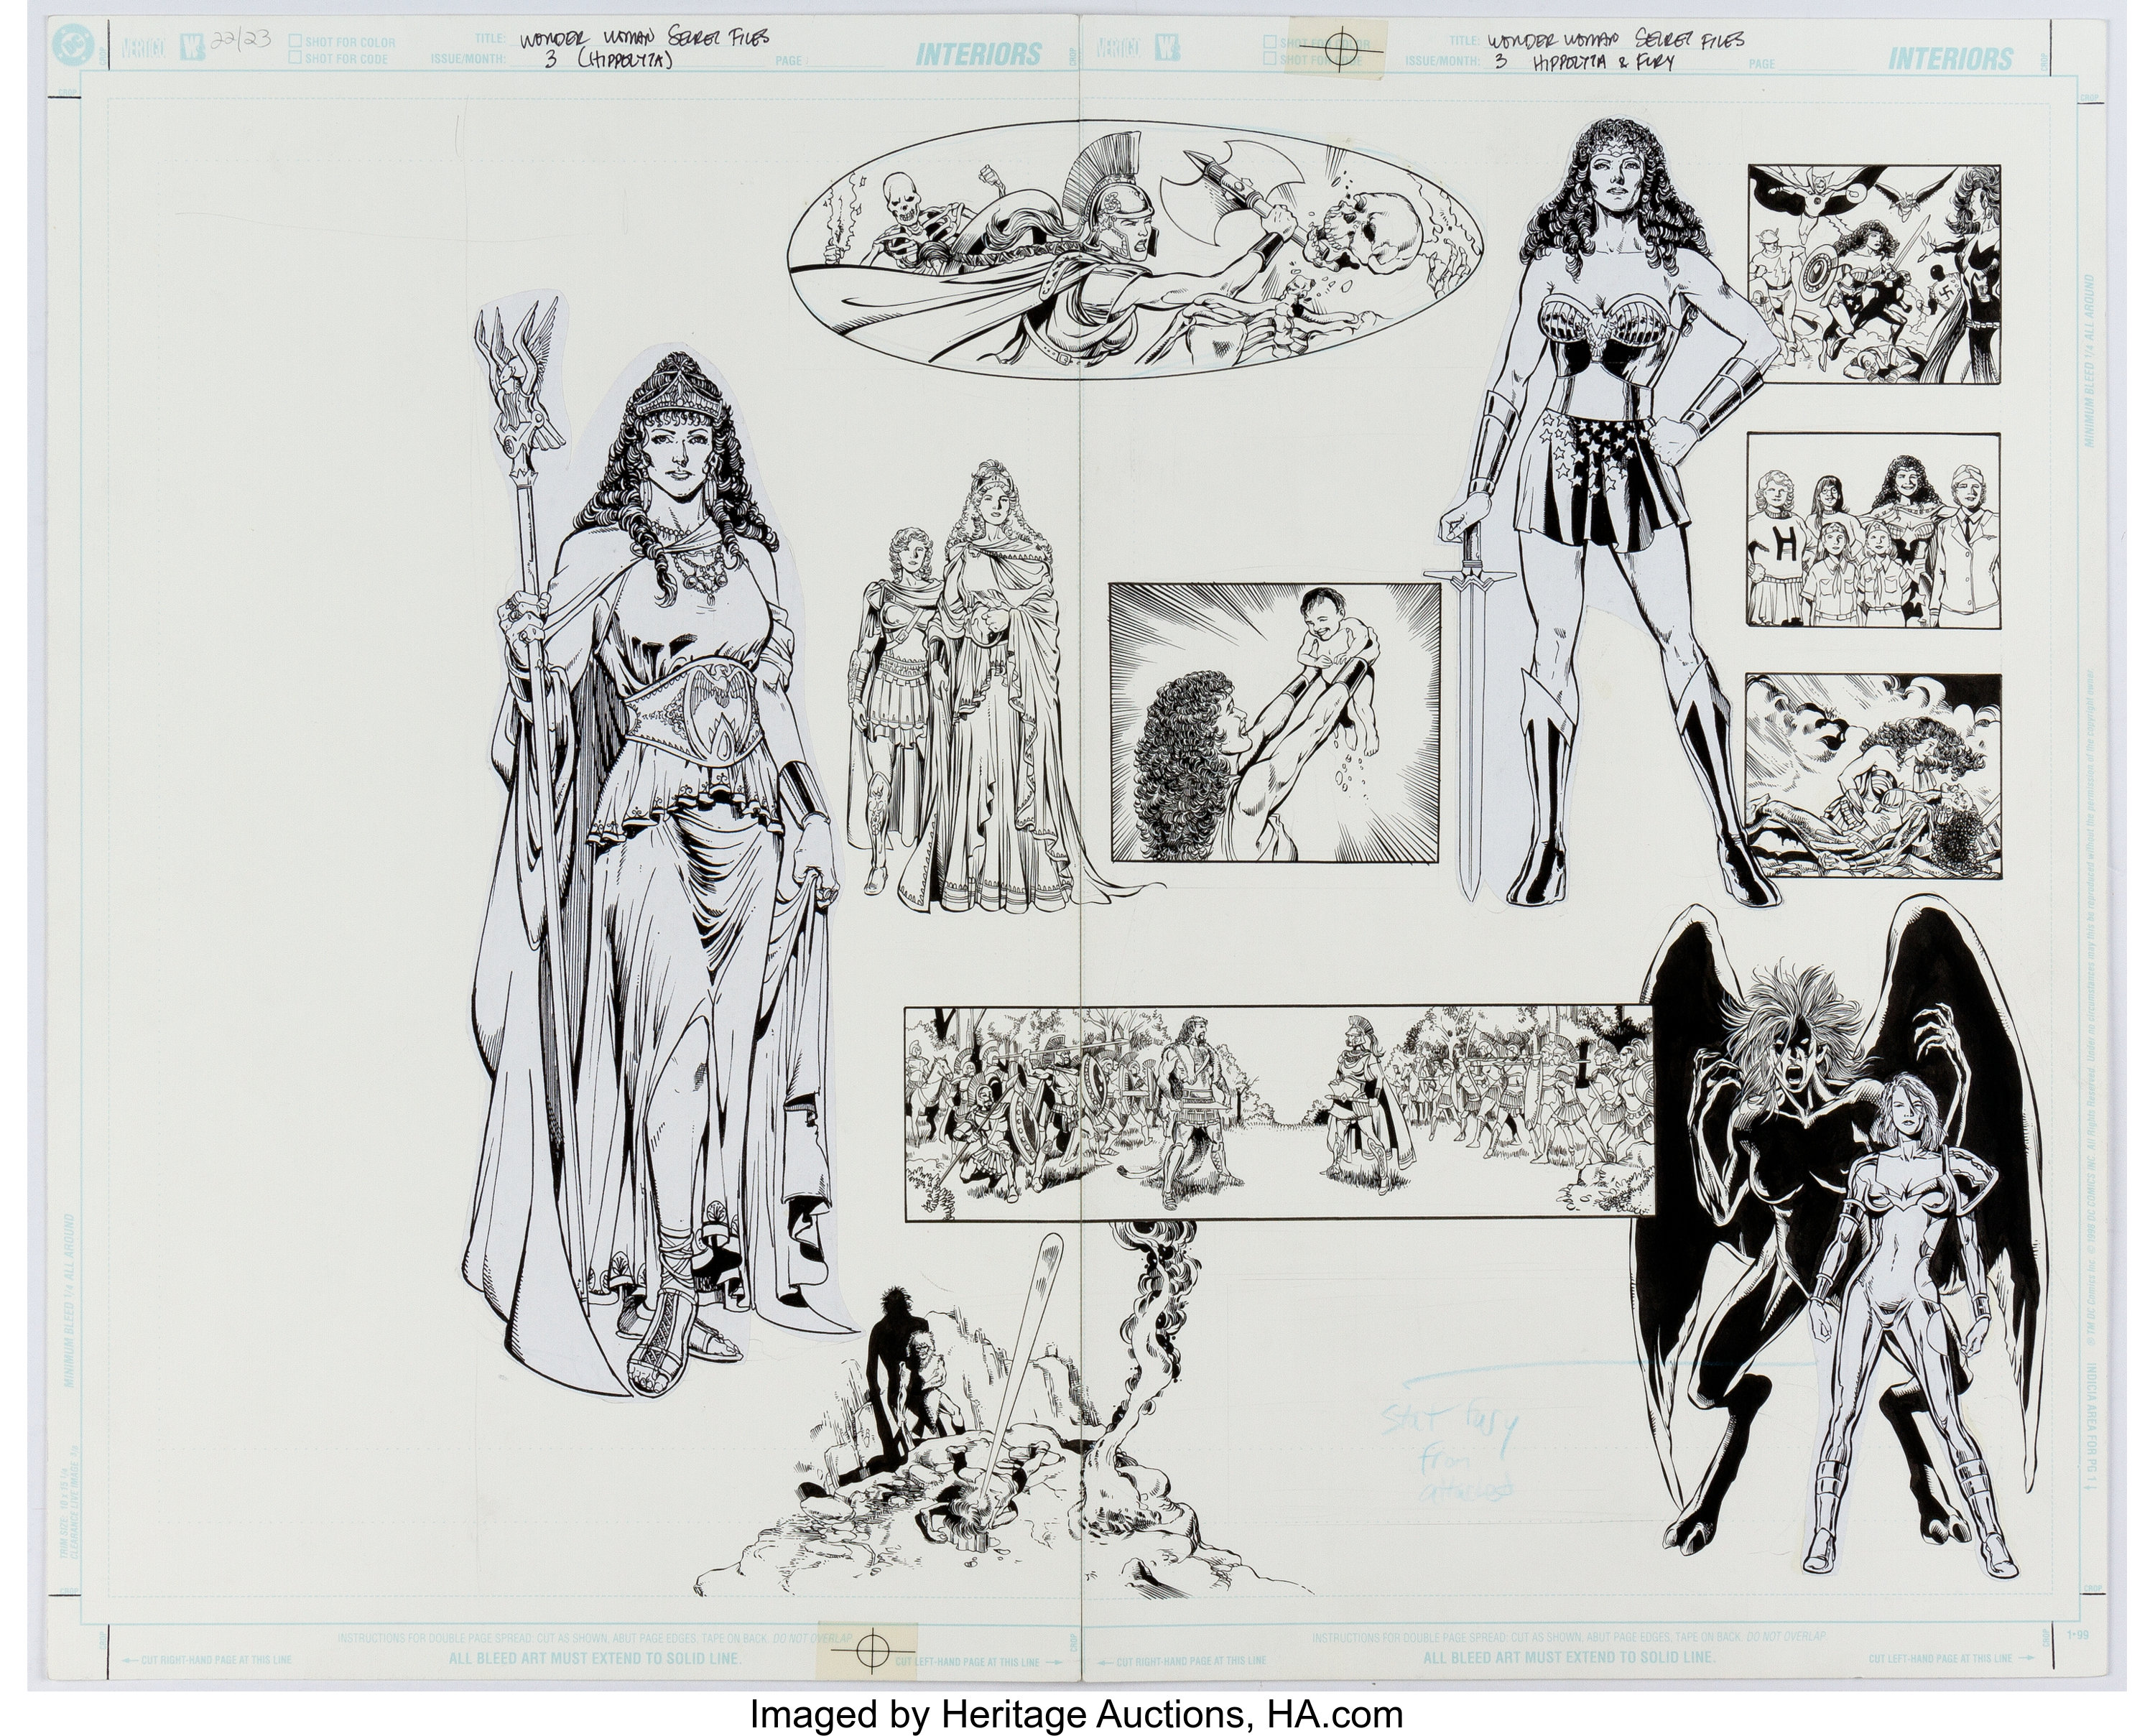 Wonder Woman Secret Files #3 (Hippolyta & Fury) Original Double Splash Page by Phil Jimenez